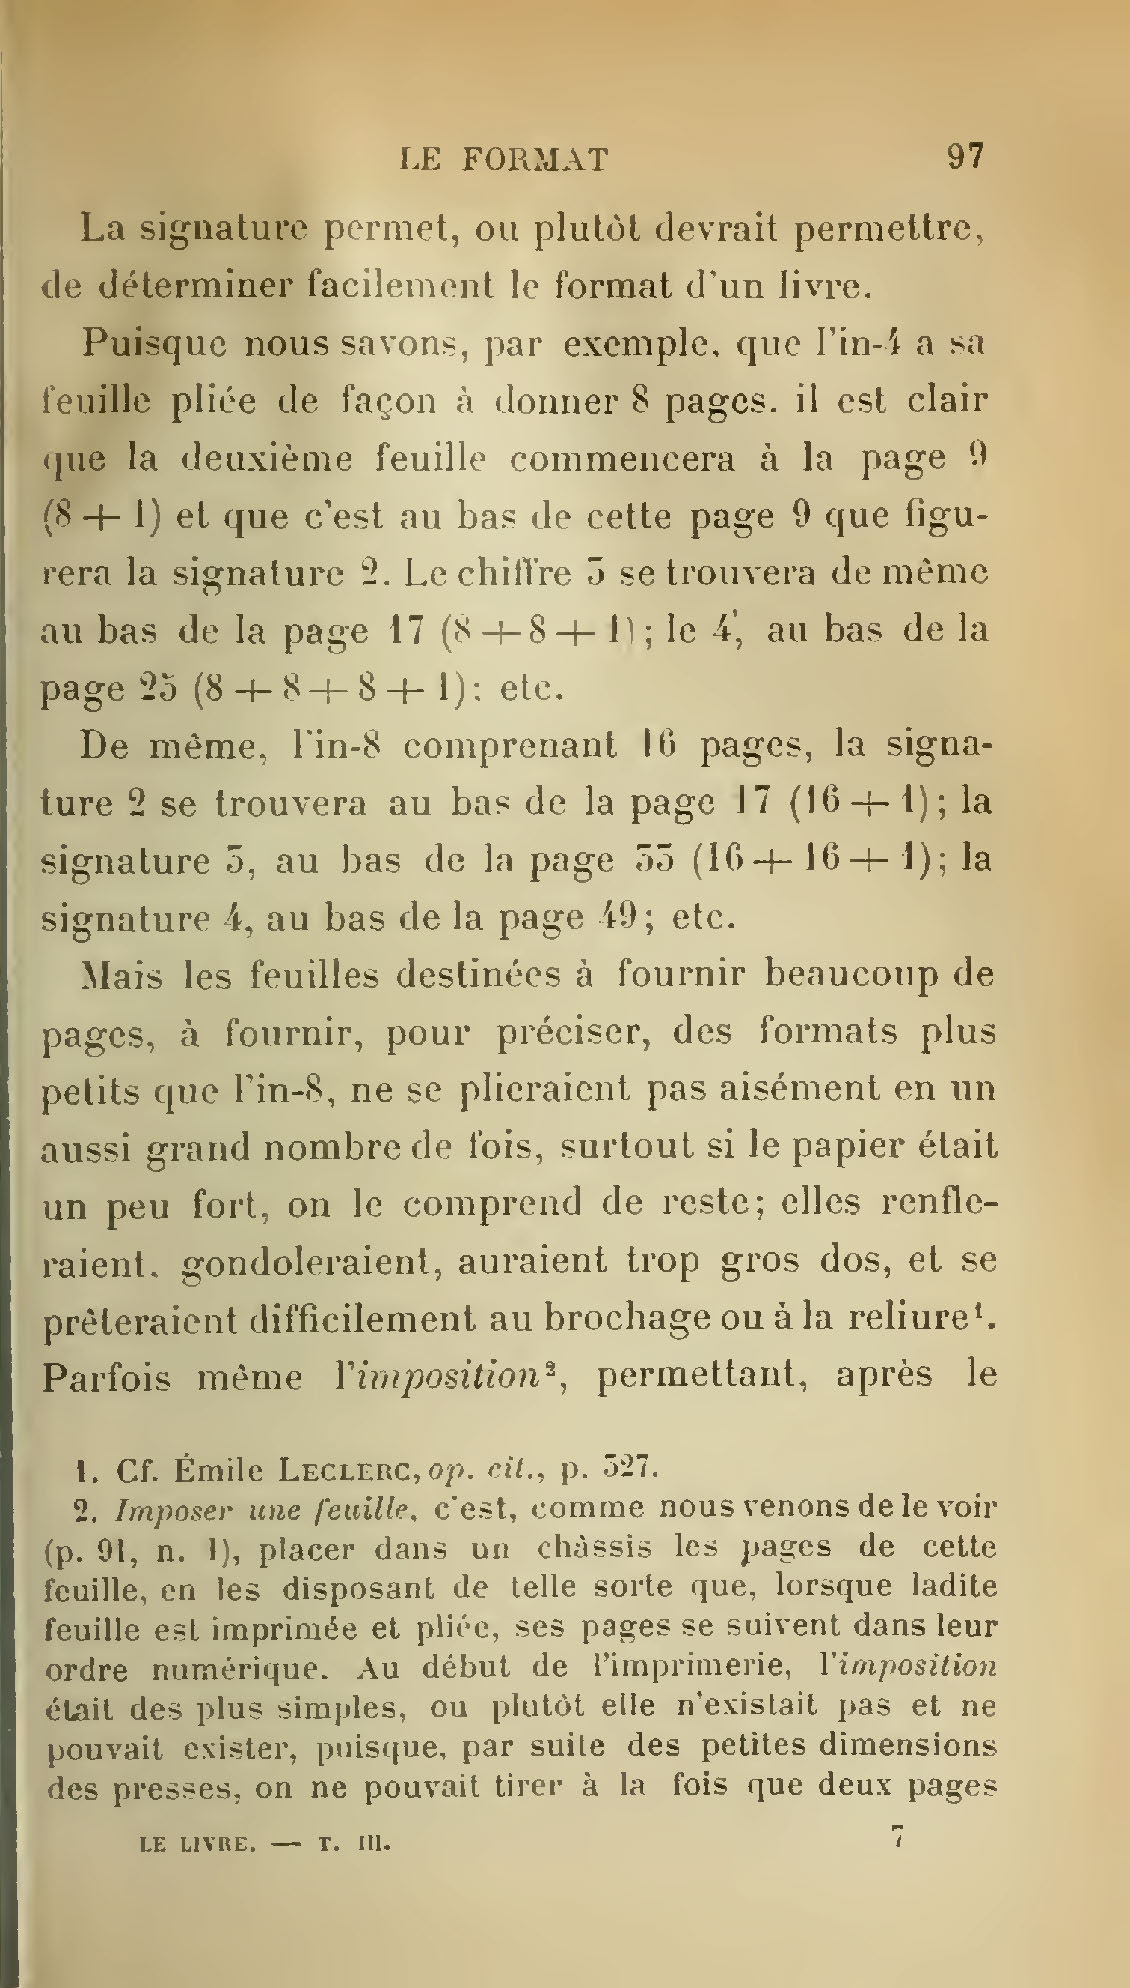 Albert Cim, Le Livre, t. III, p. 97.